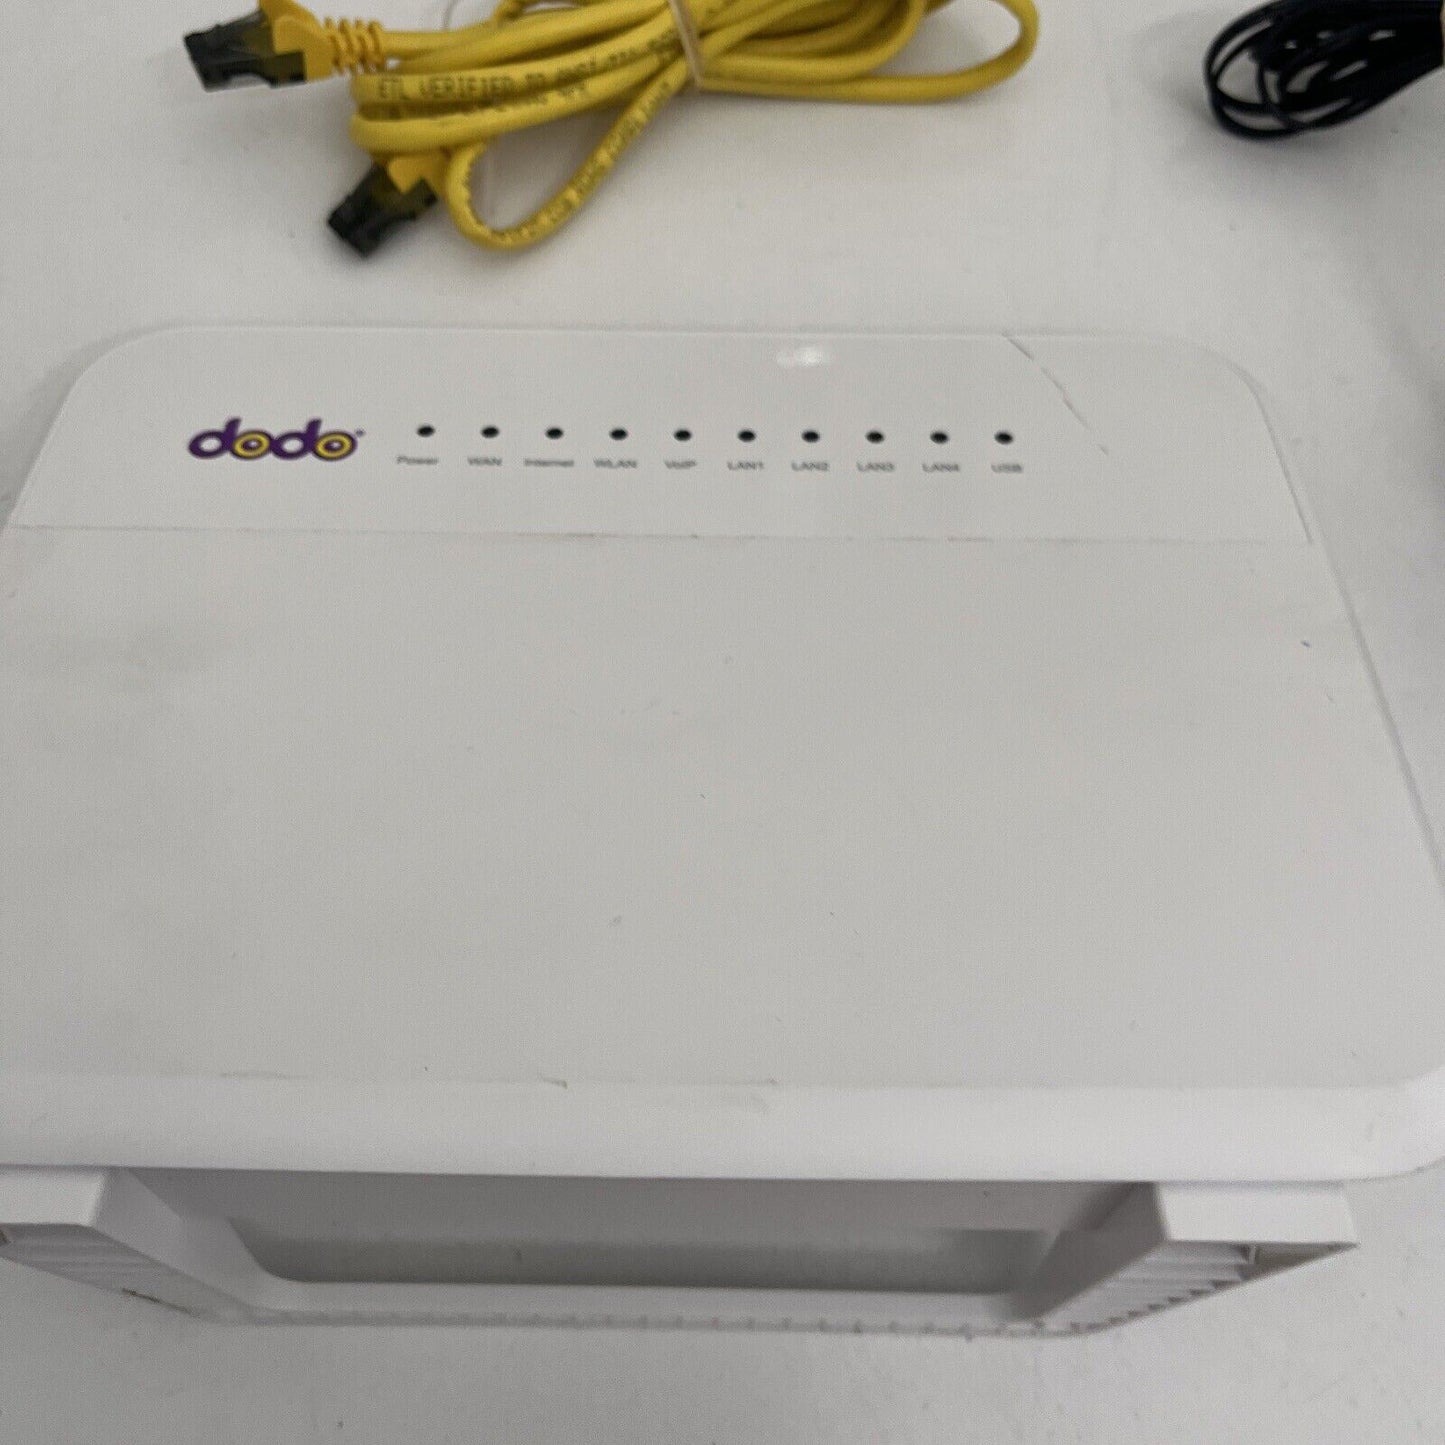 Dodo Huawei HG659 Home Gateway Wireless Router Modem NBN Compatible